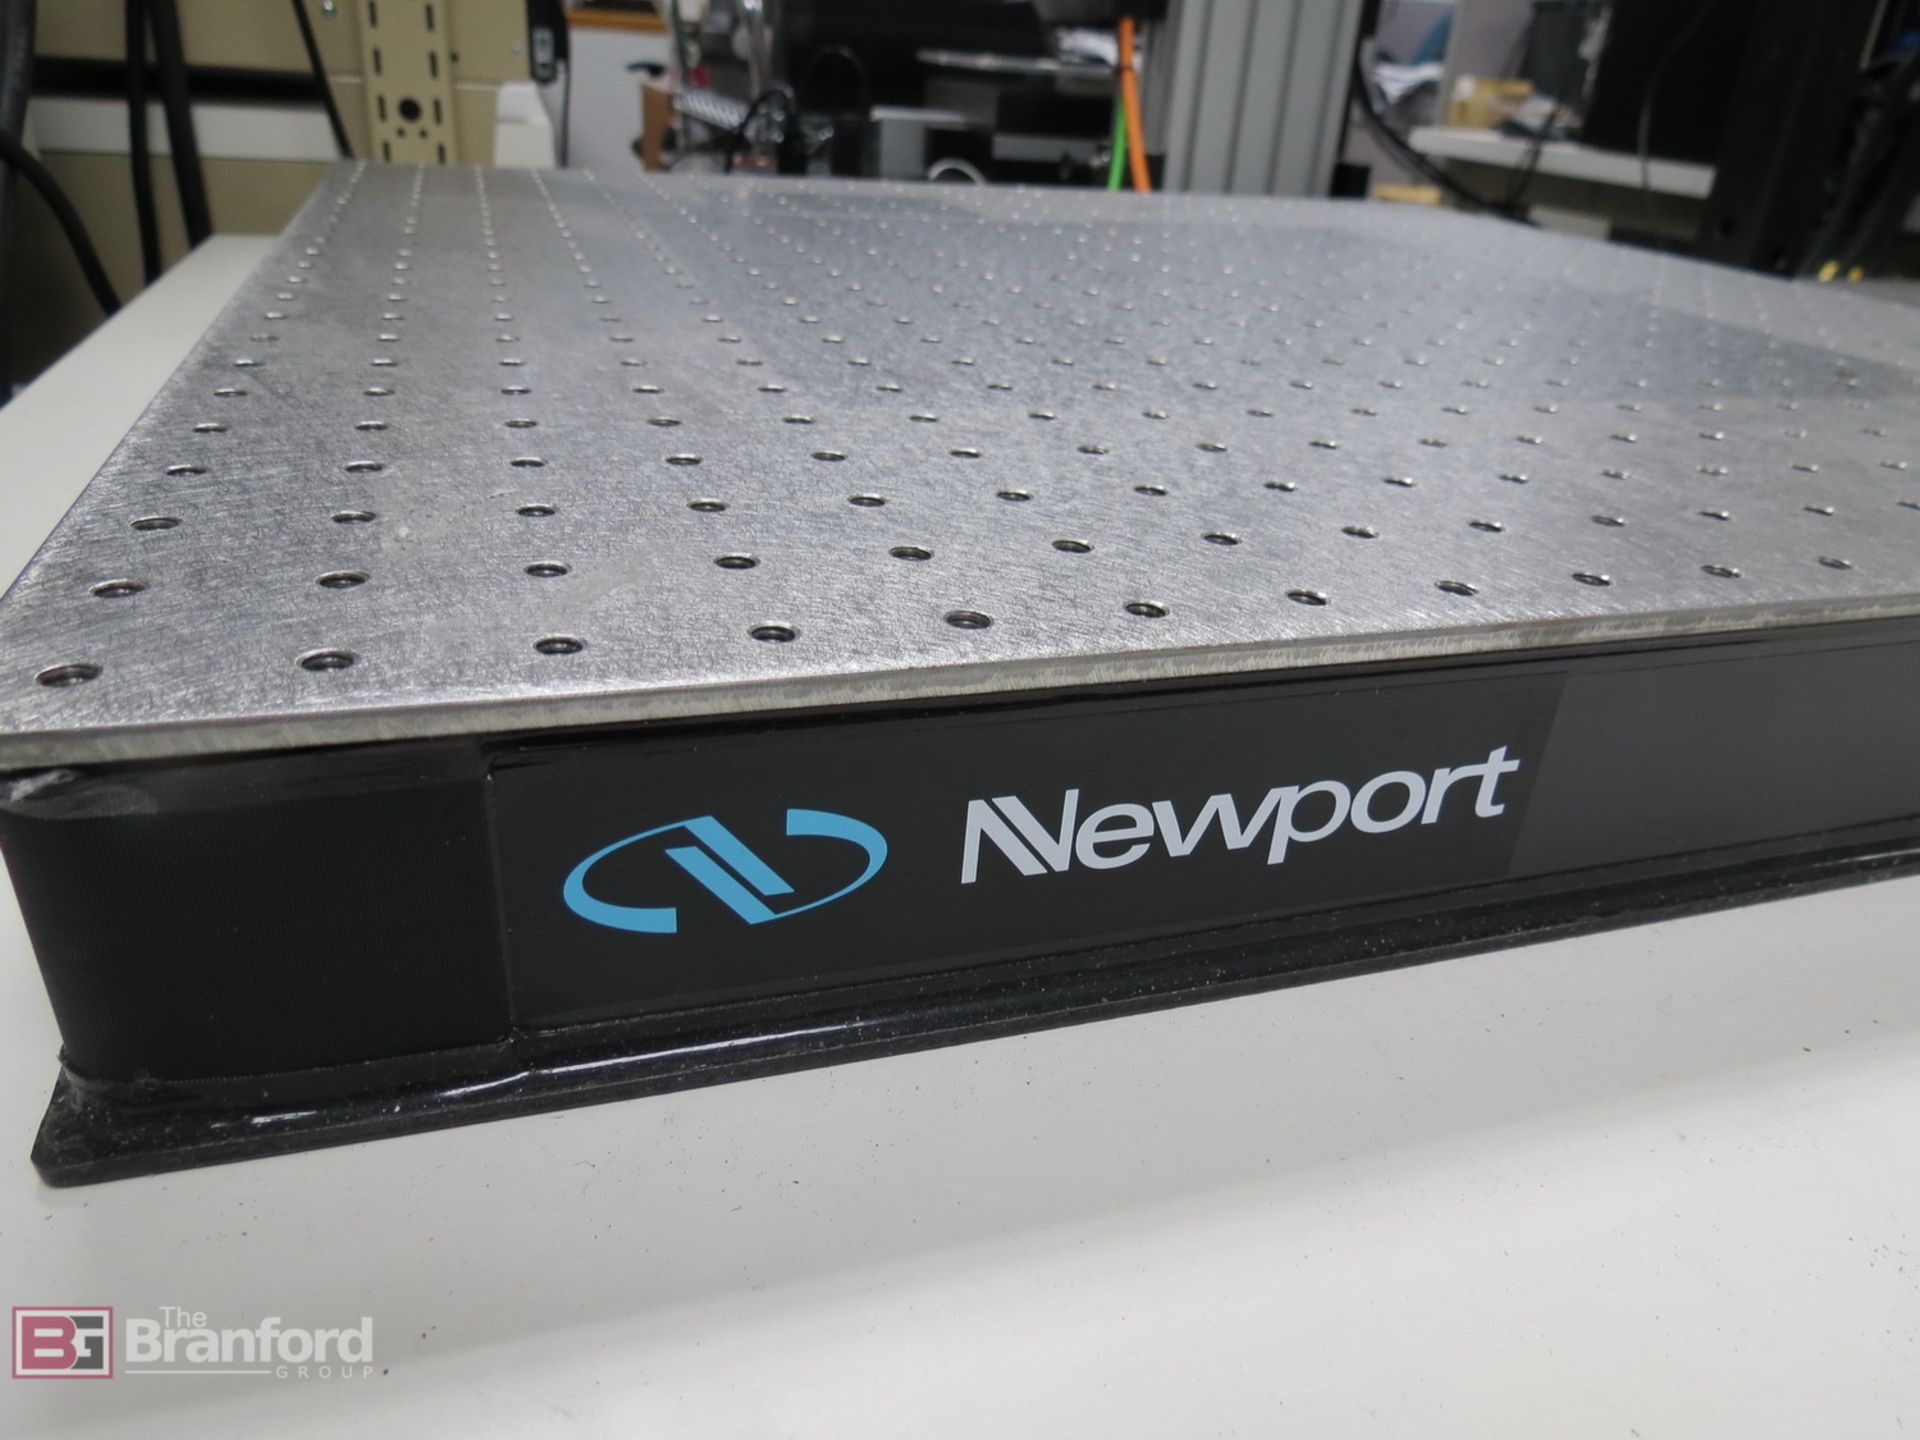 Newport SG-22-2 Optical Breadboard Table - Image 3 of 4